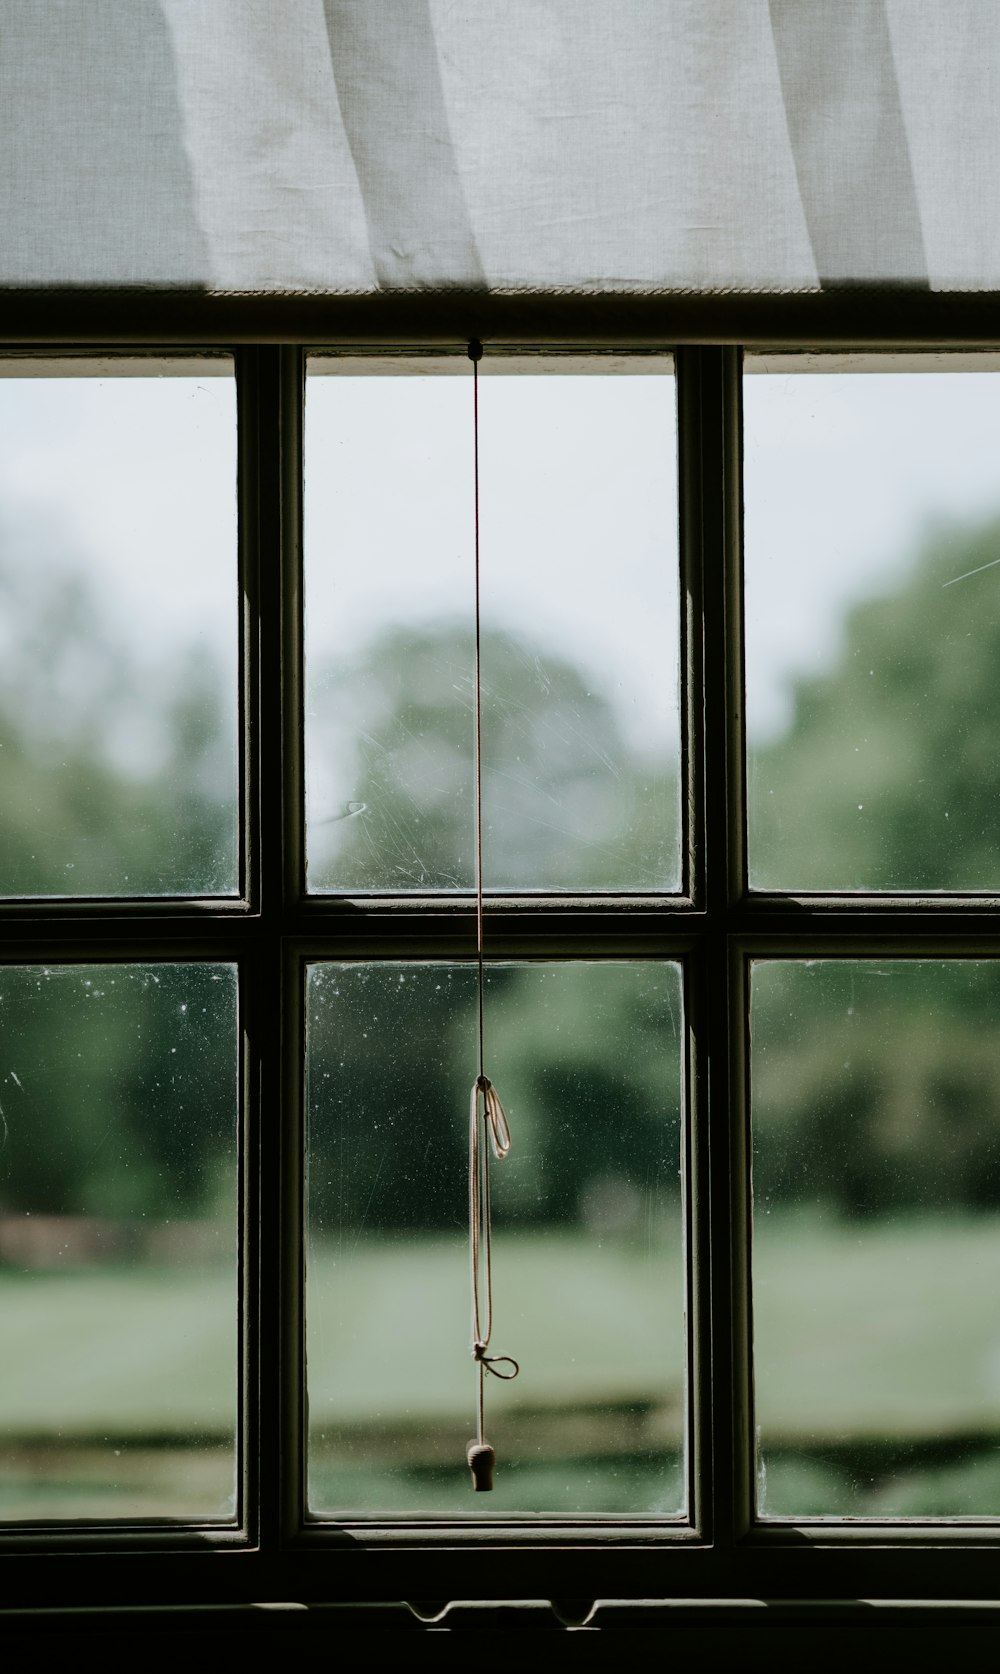 Foto de enfoque selectivo de ventana de vidrio cerrada con marco de madera negra